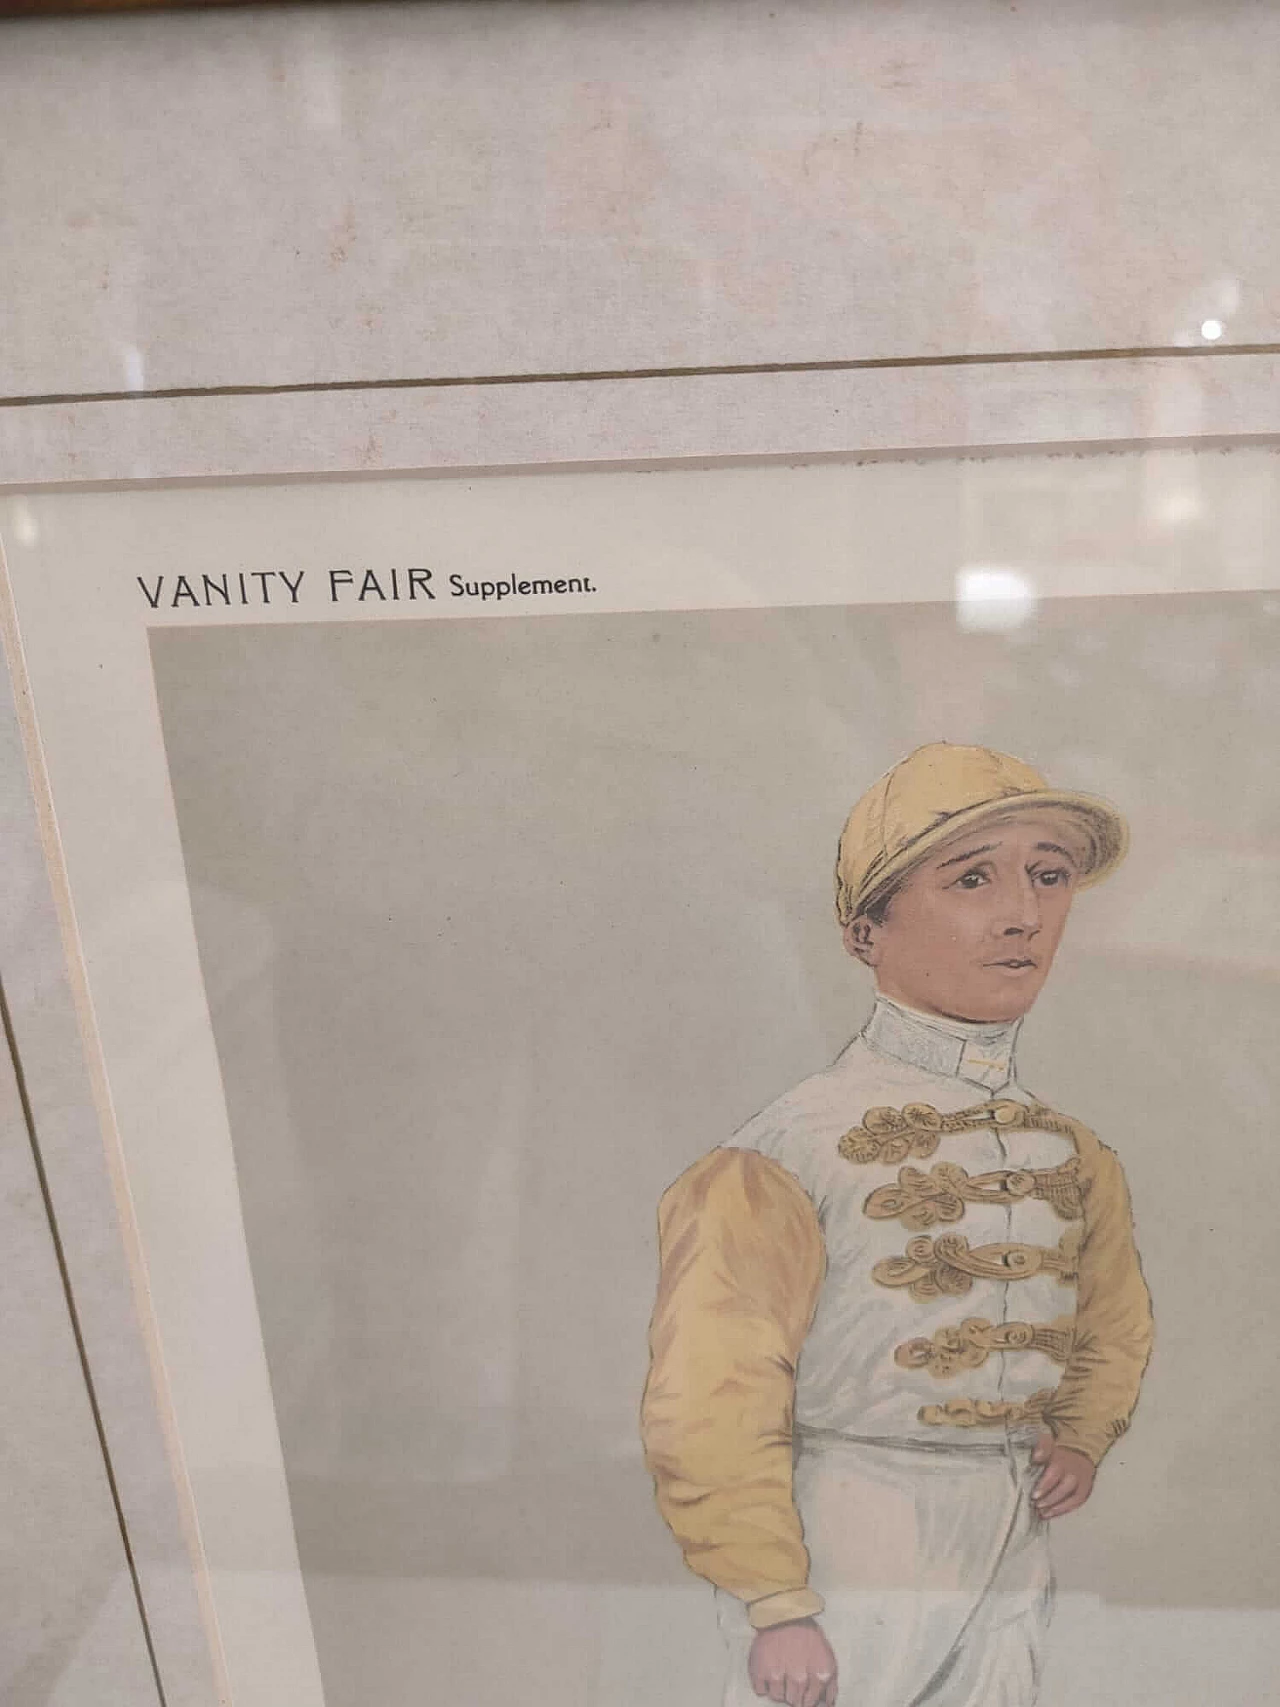 Stampa litografica del fantino Danny Maher per Vanity Fair, 1903 4